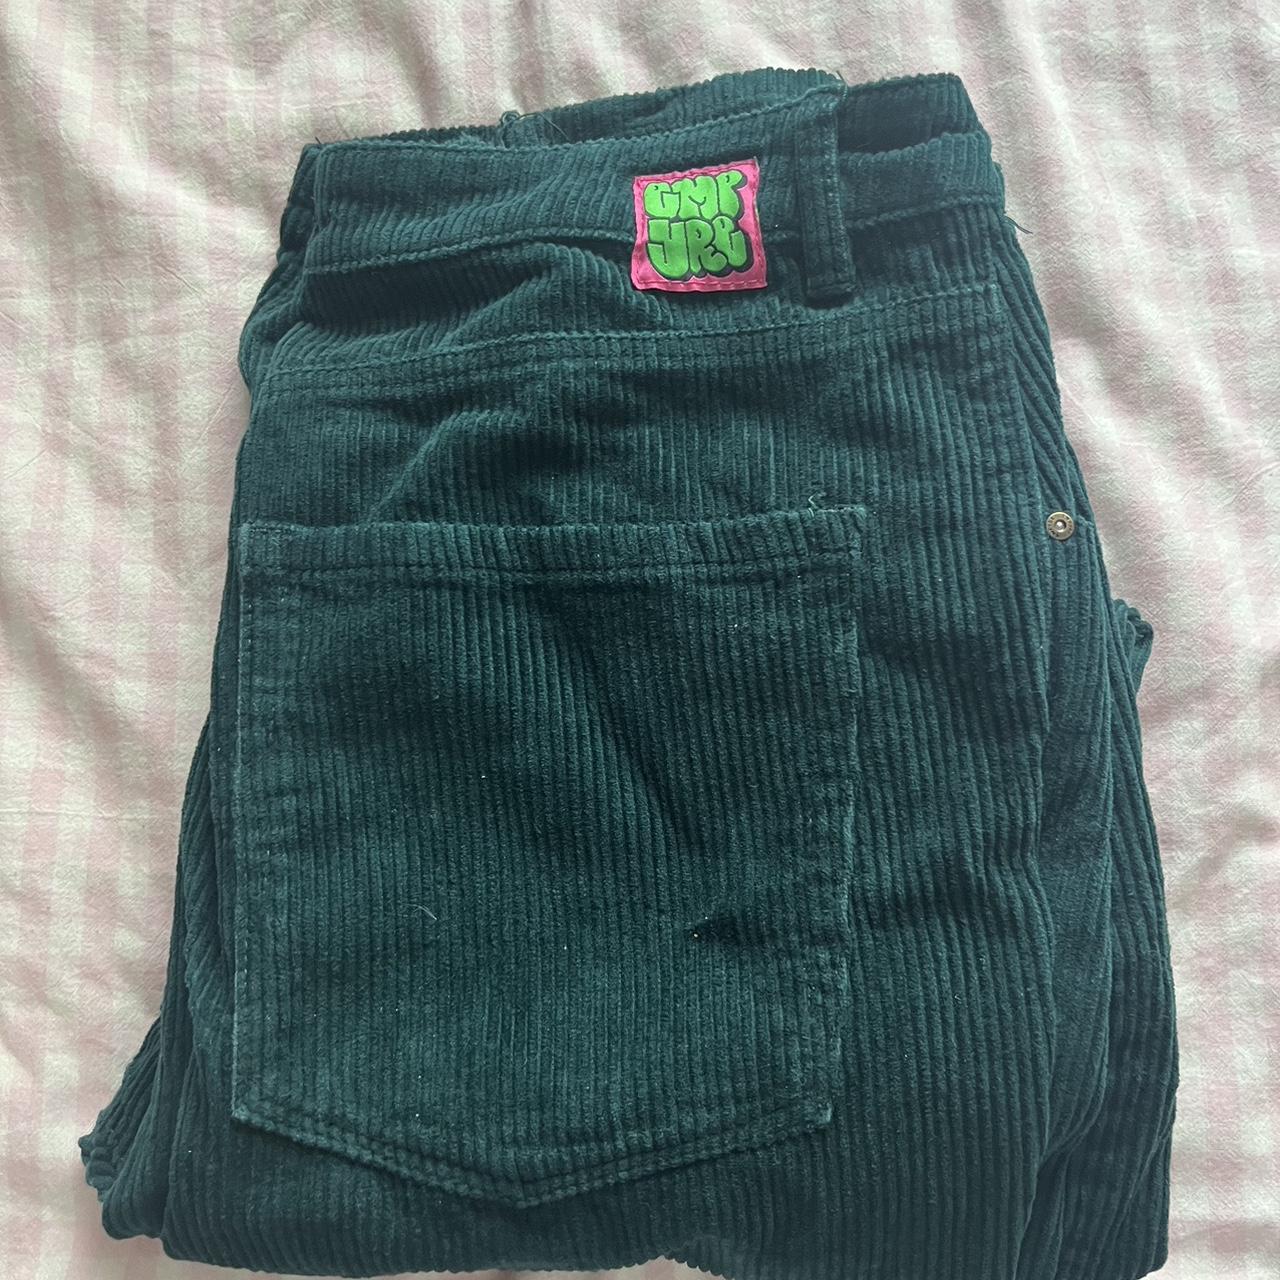 Empyre pants Green pants - Depop